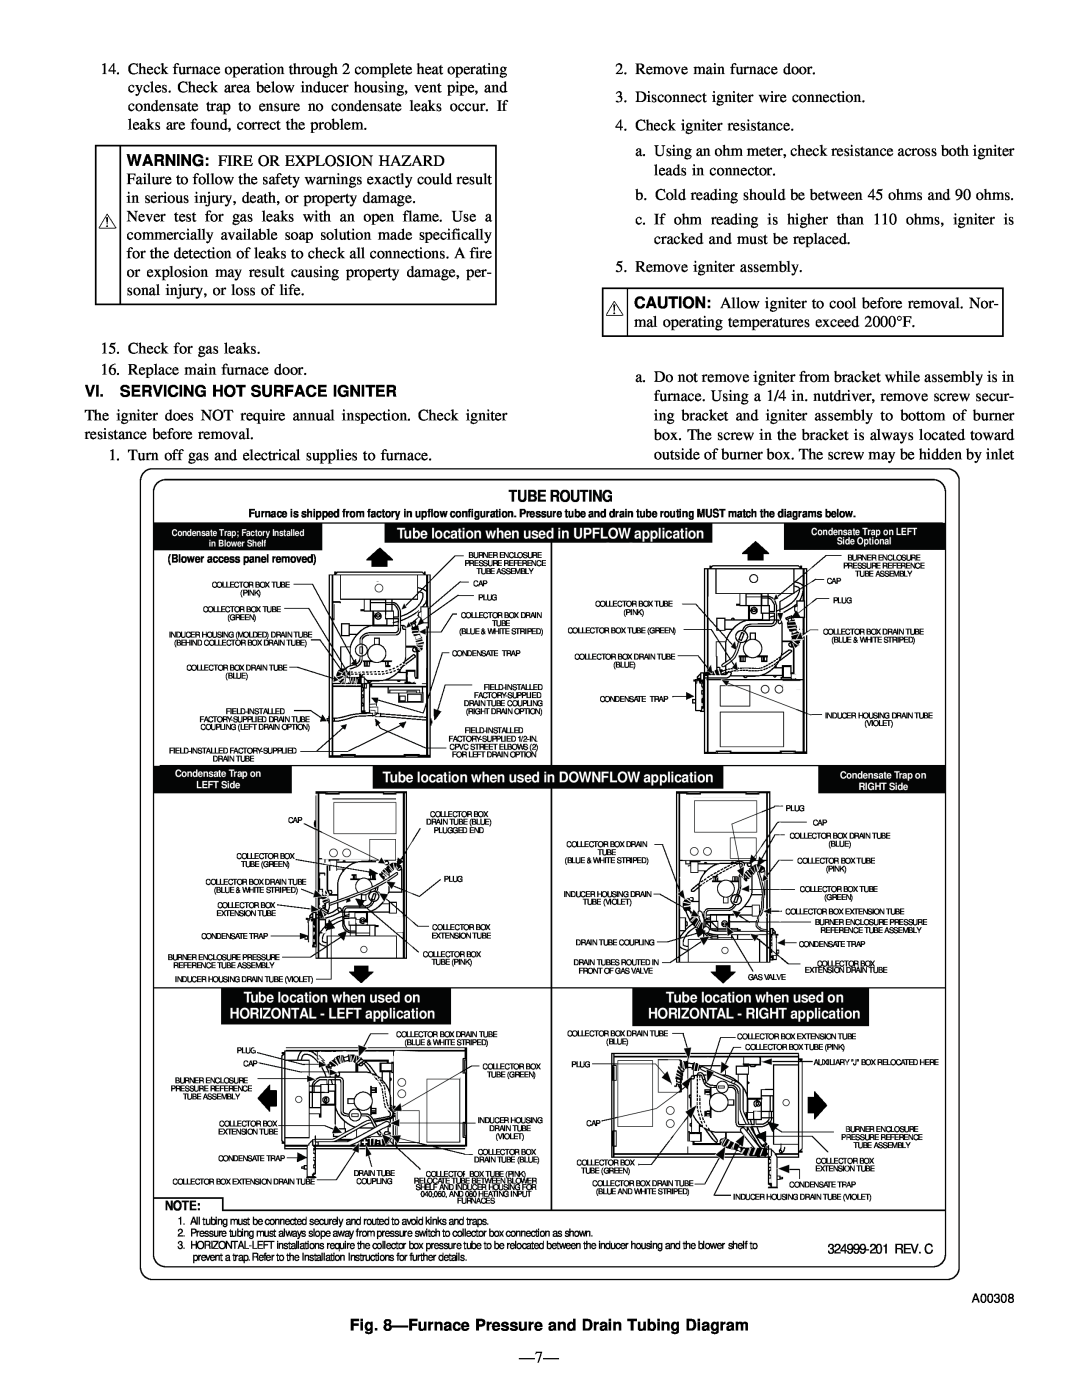 Bryant 350MAV user manual Vi. Servicing Hot Surface Igniter, FurnacePressure and Drain Tubing Diagram, Tube Routing 